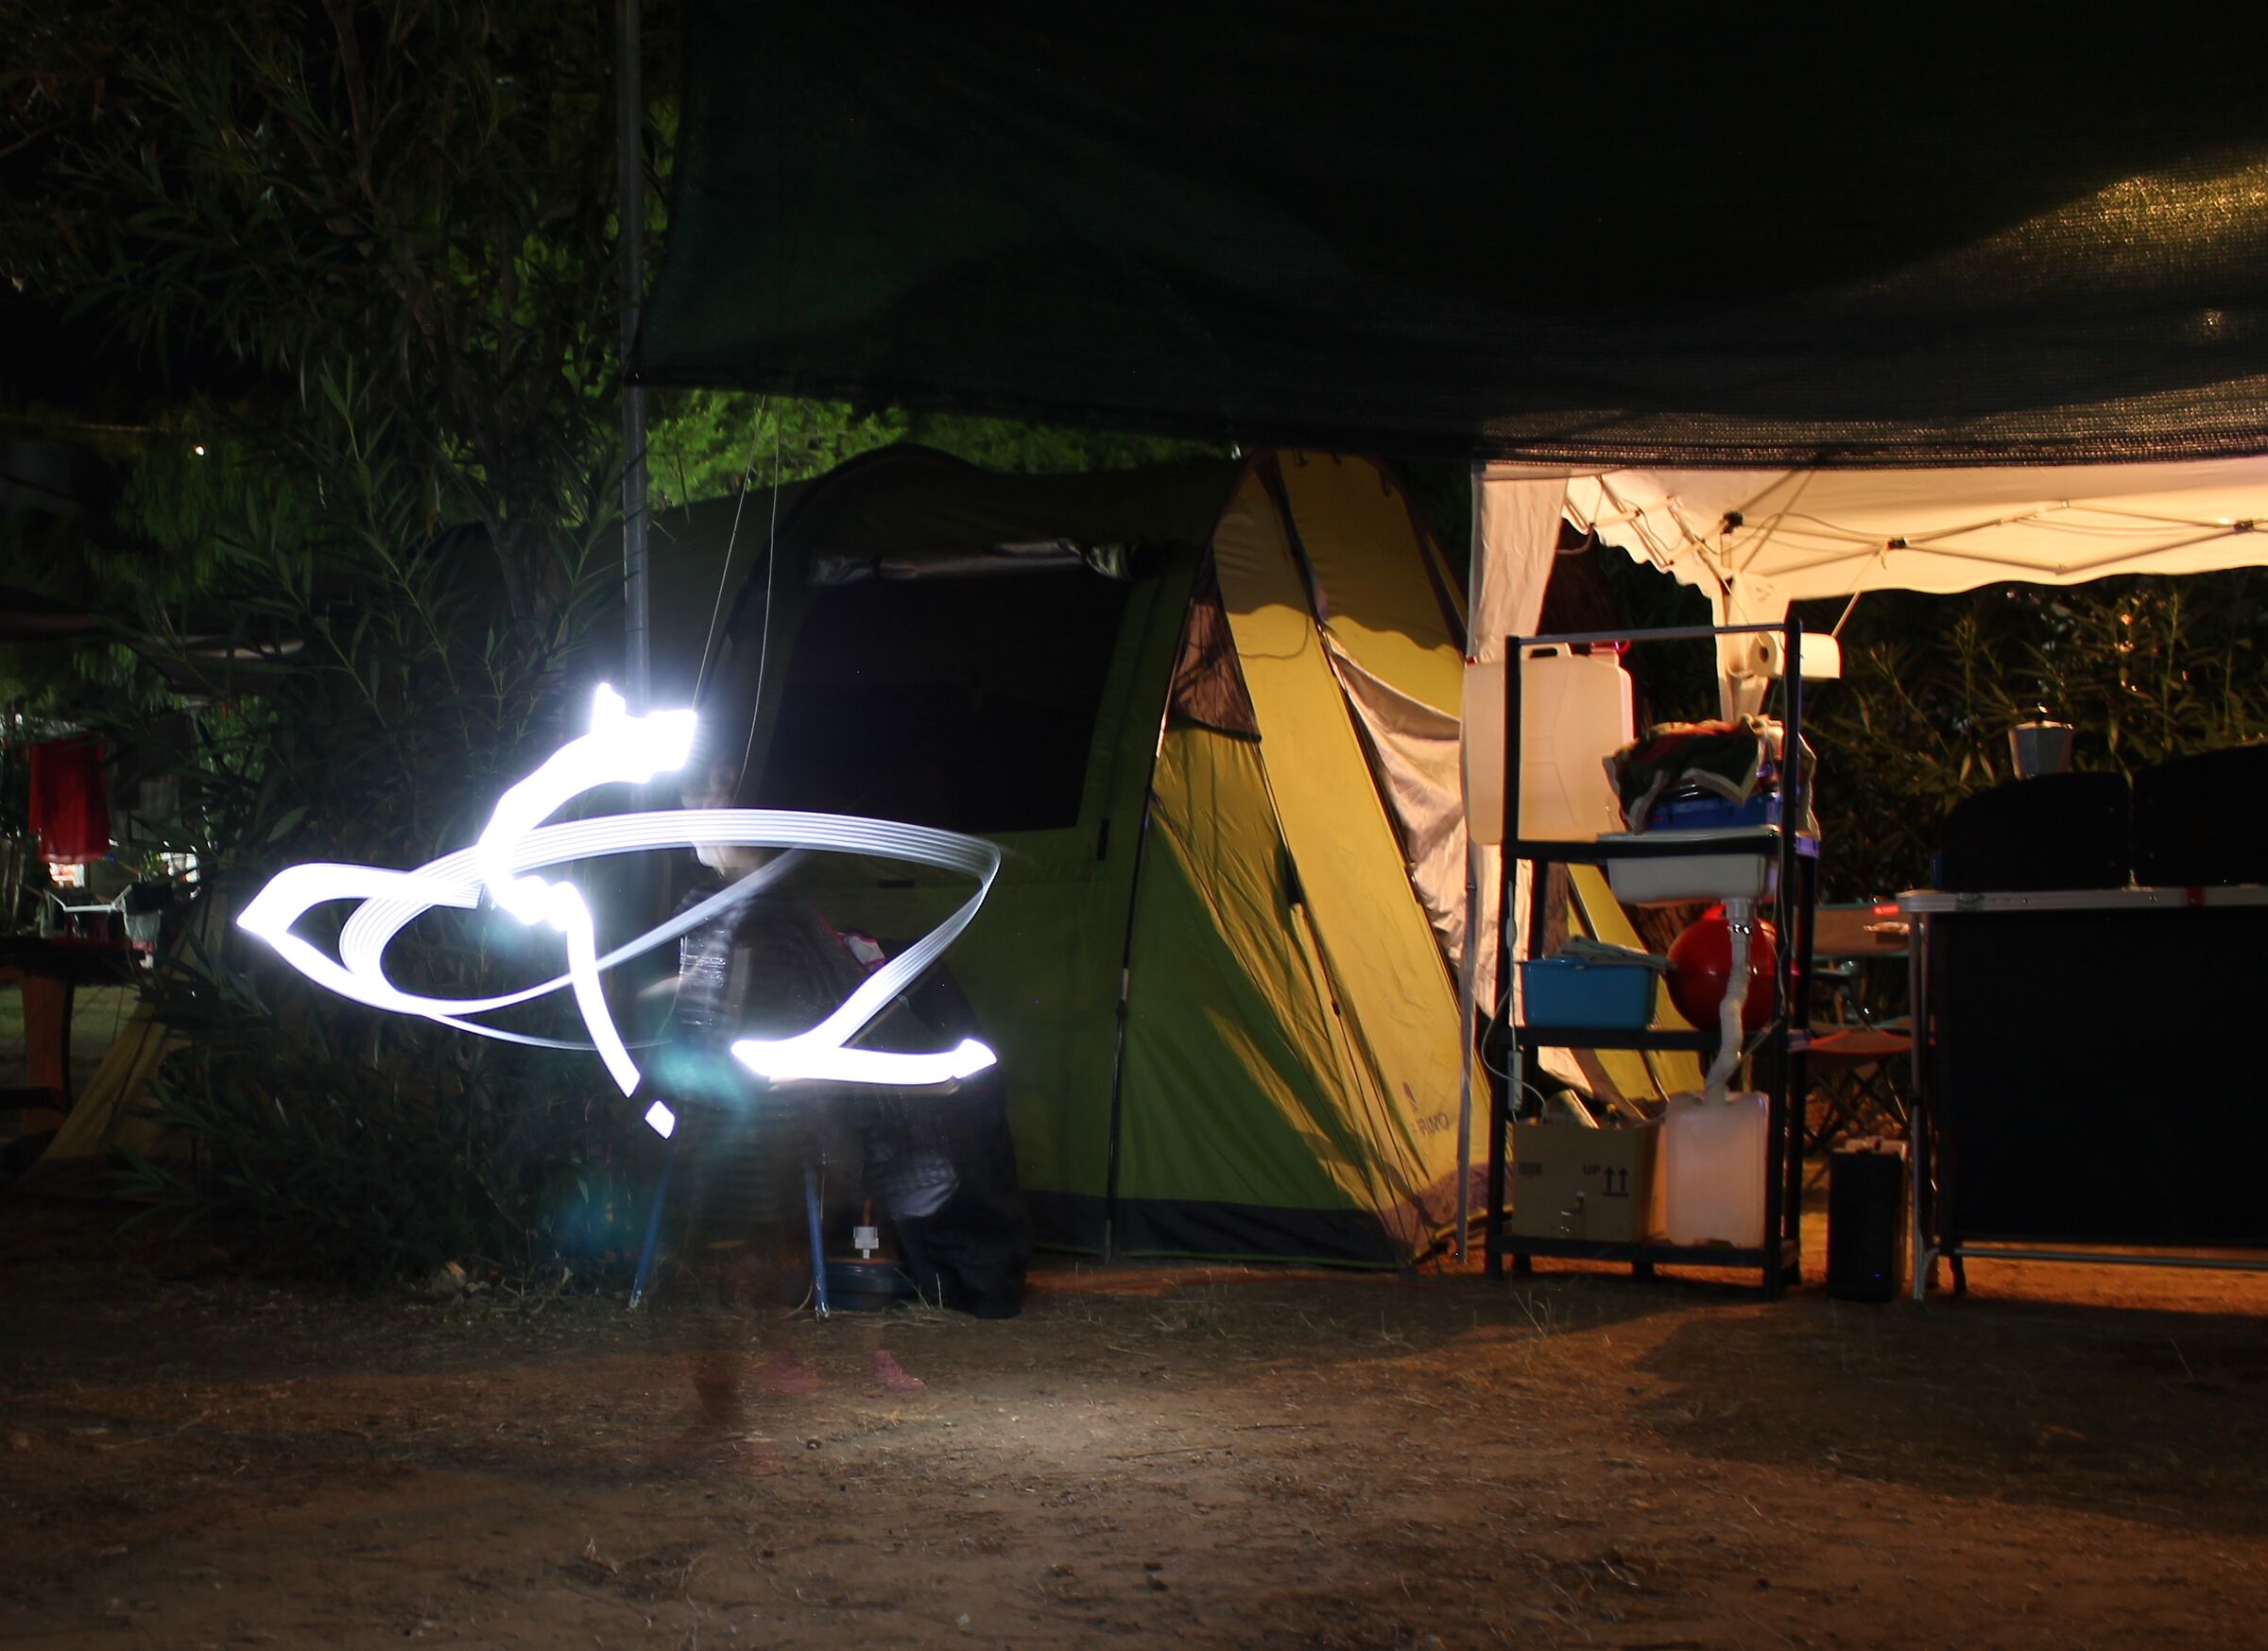 Light dances in the tent...